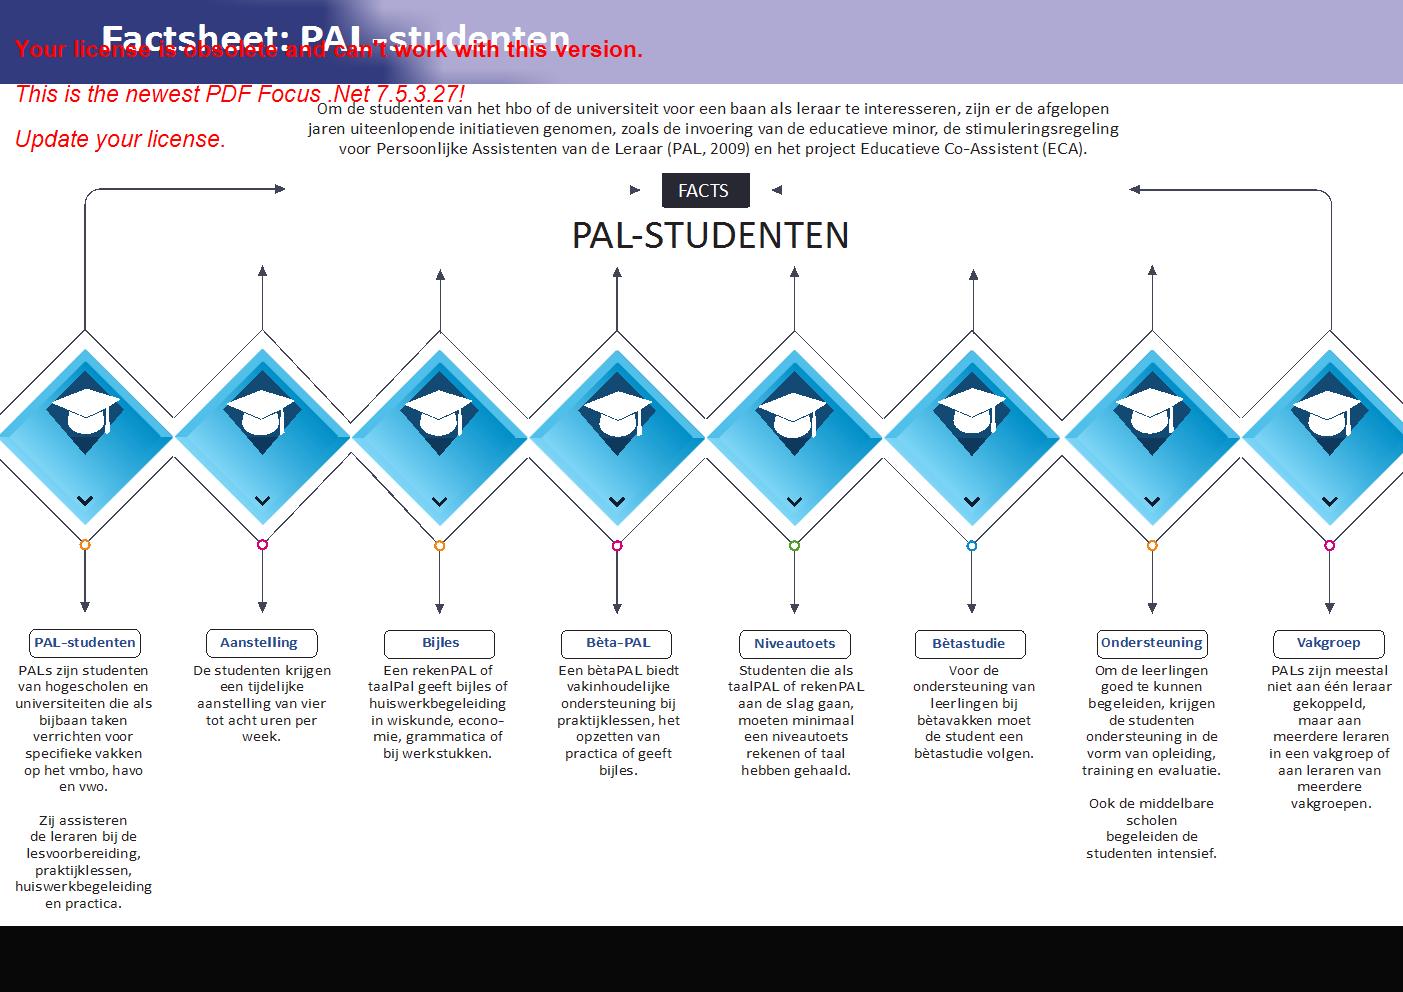 Factsheet PAL-studenten - Feiten over  PAL-studenten